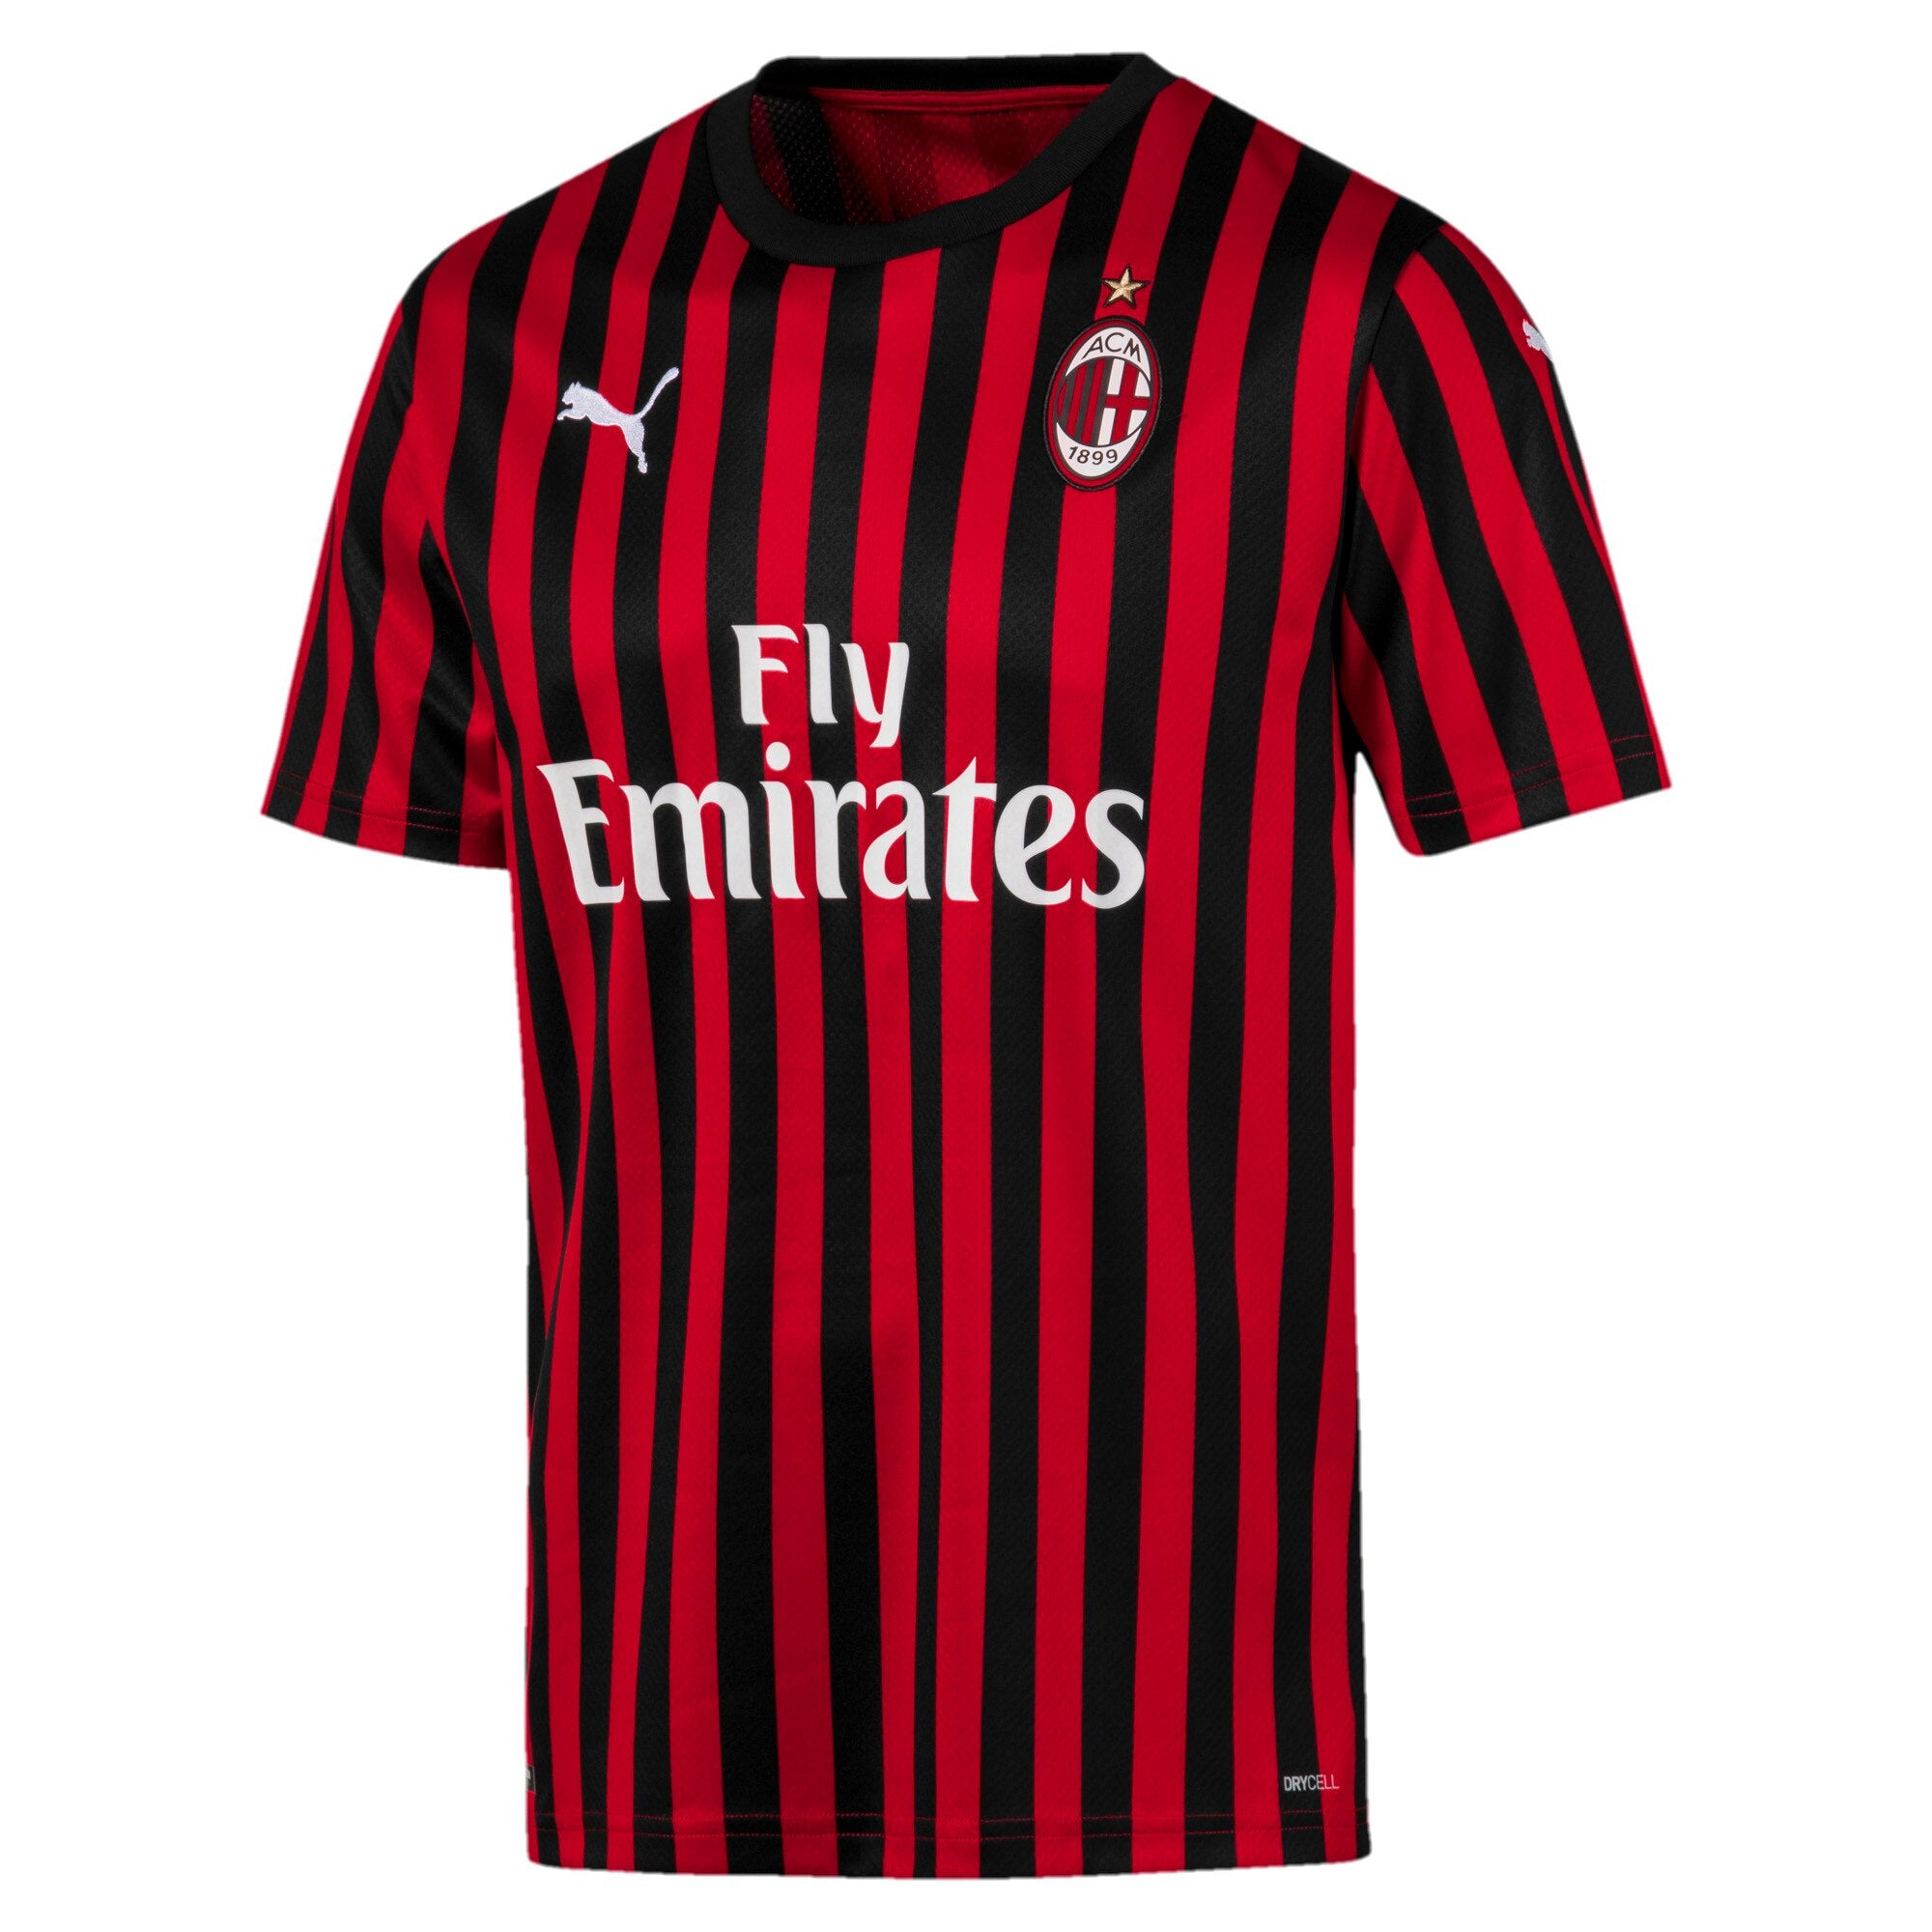 AC Milan 2019/20 Home Replica Jersey - Red/Black